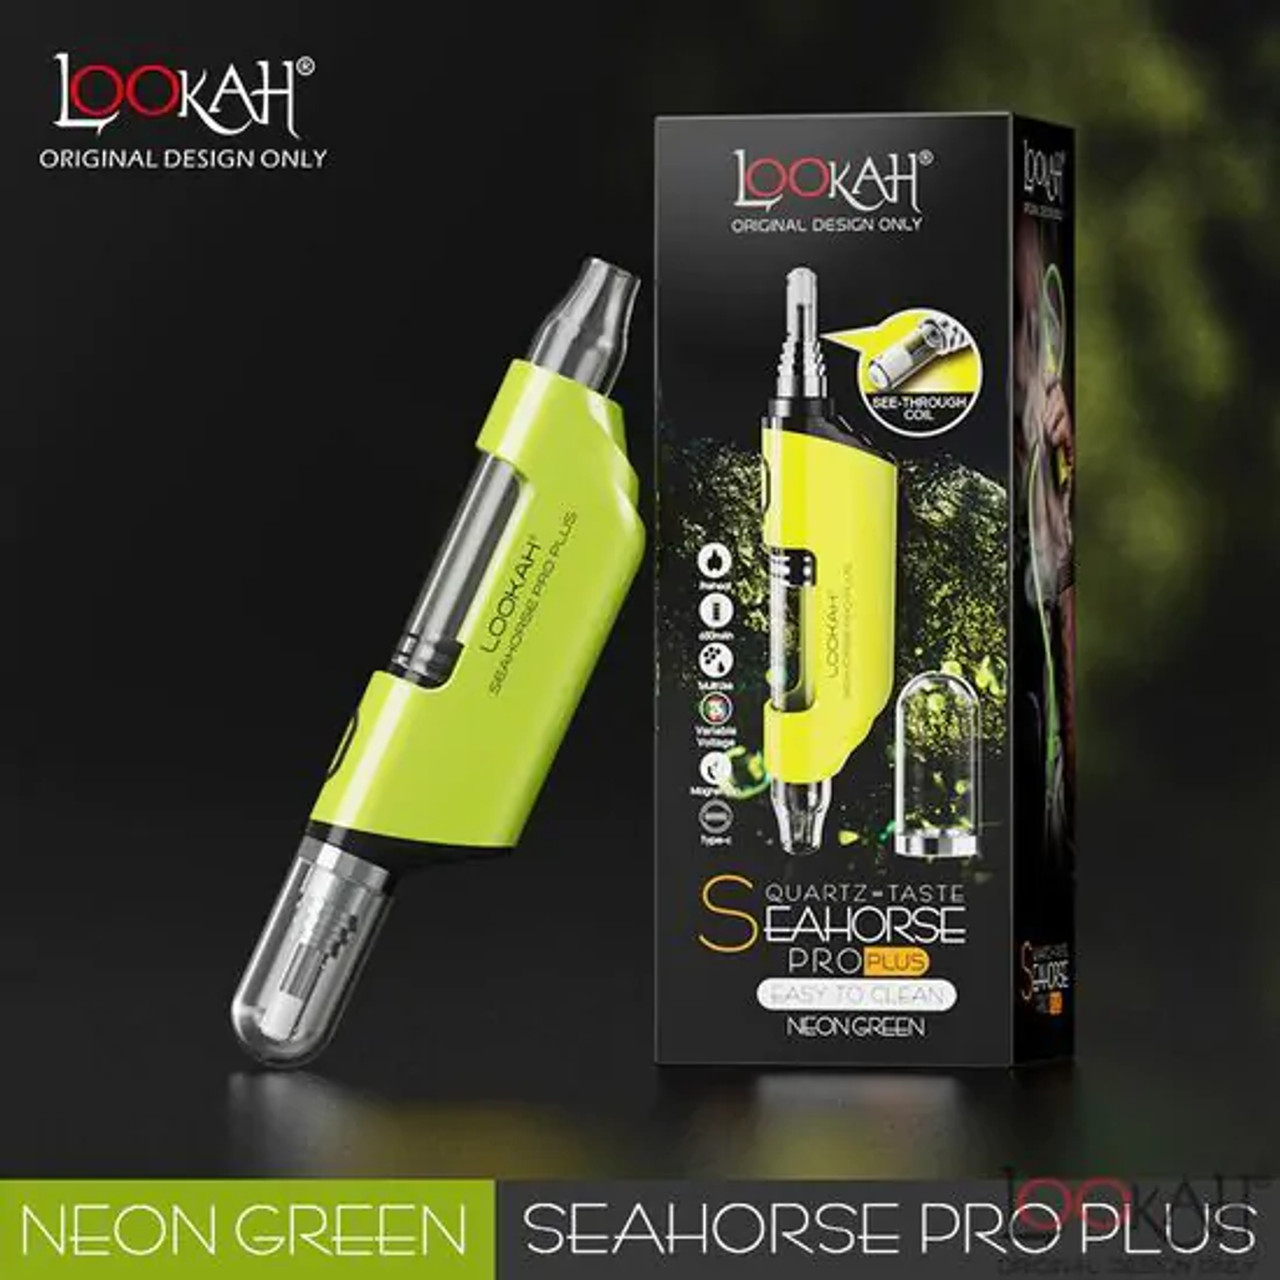 Lookah Seahorse Pro Plus | Neon Green